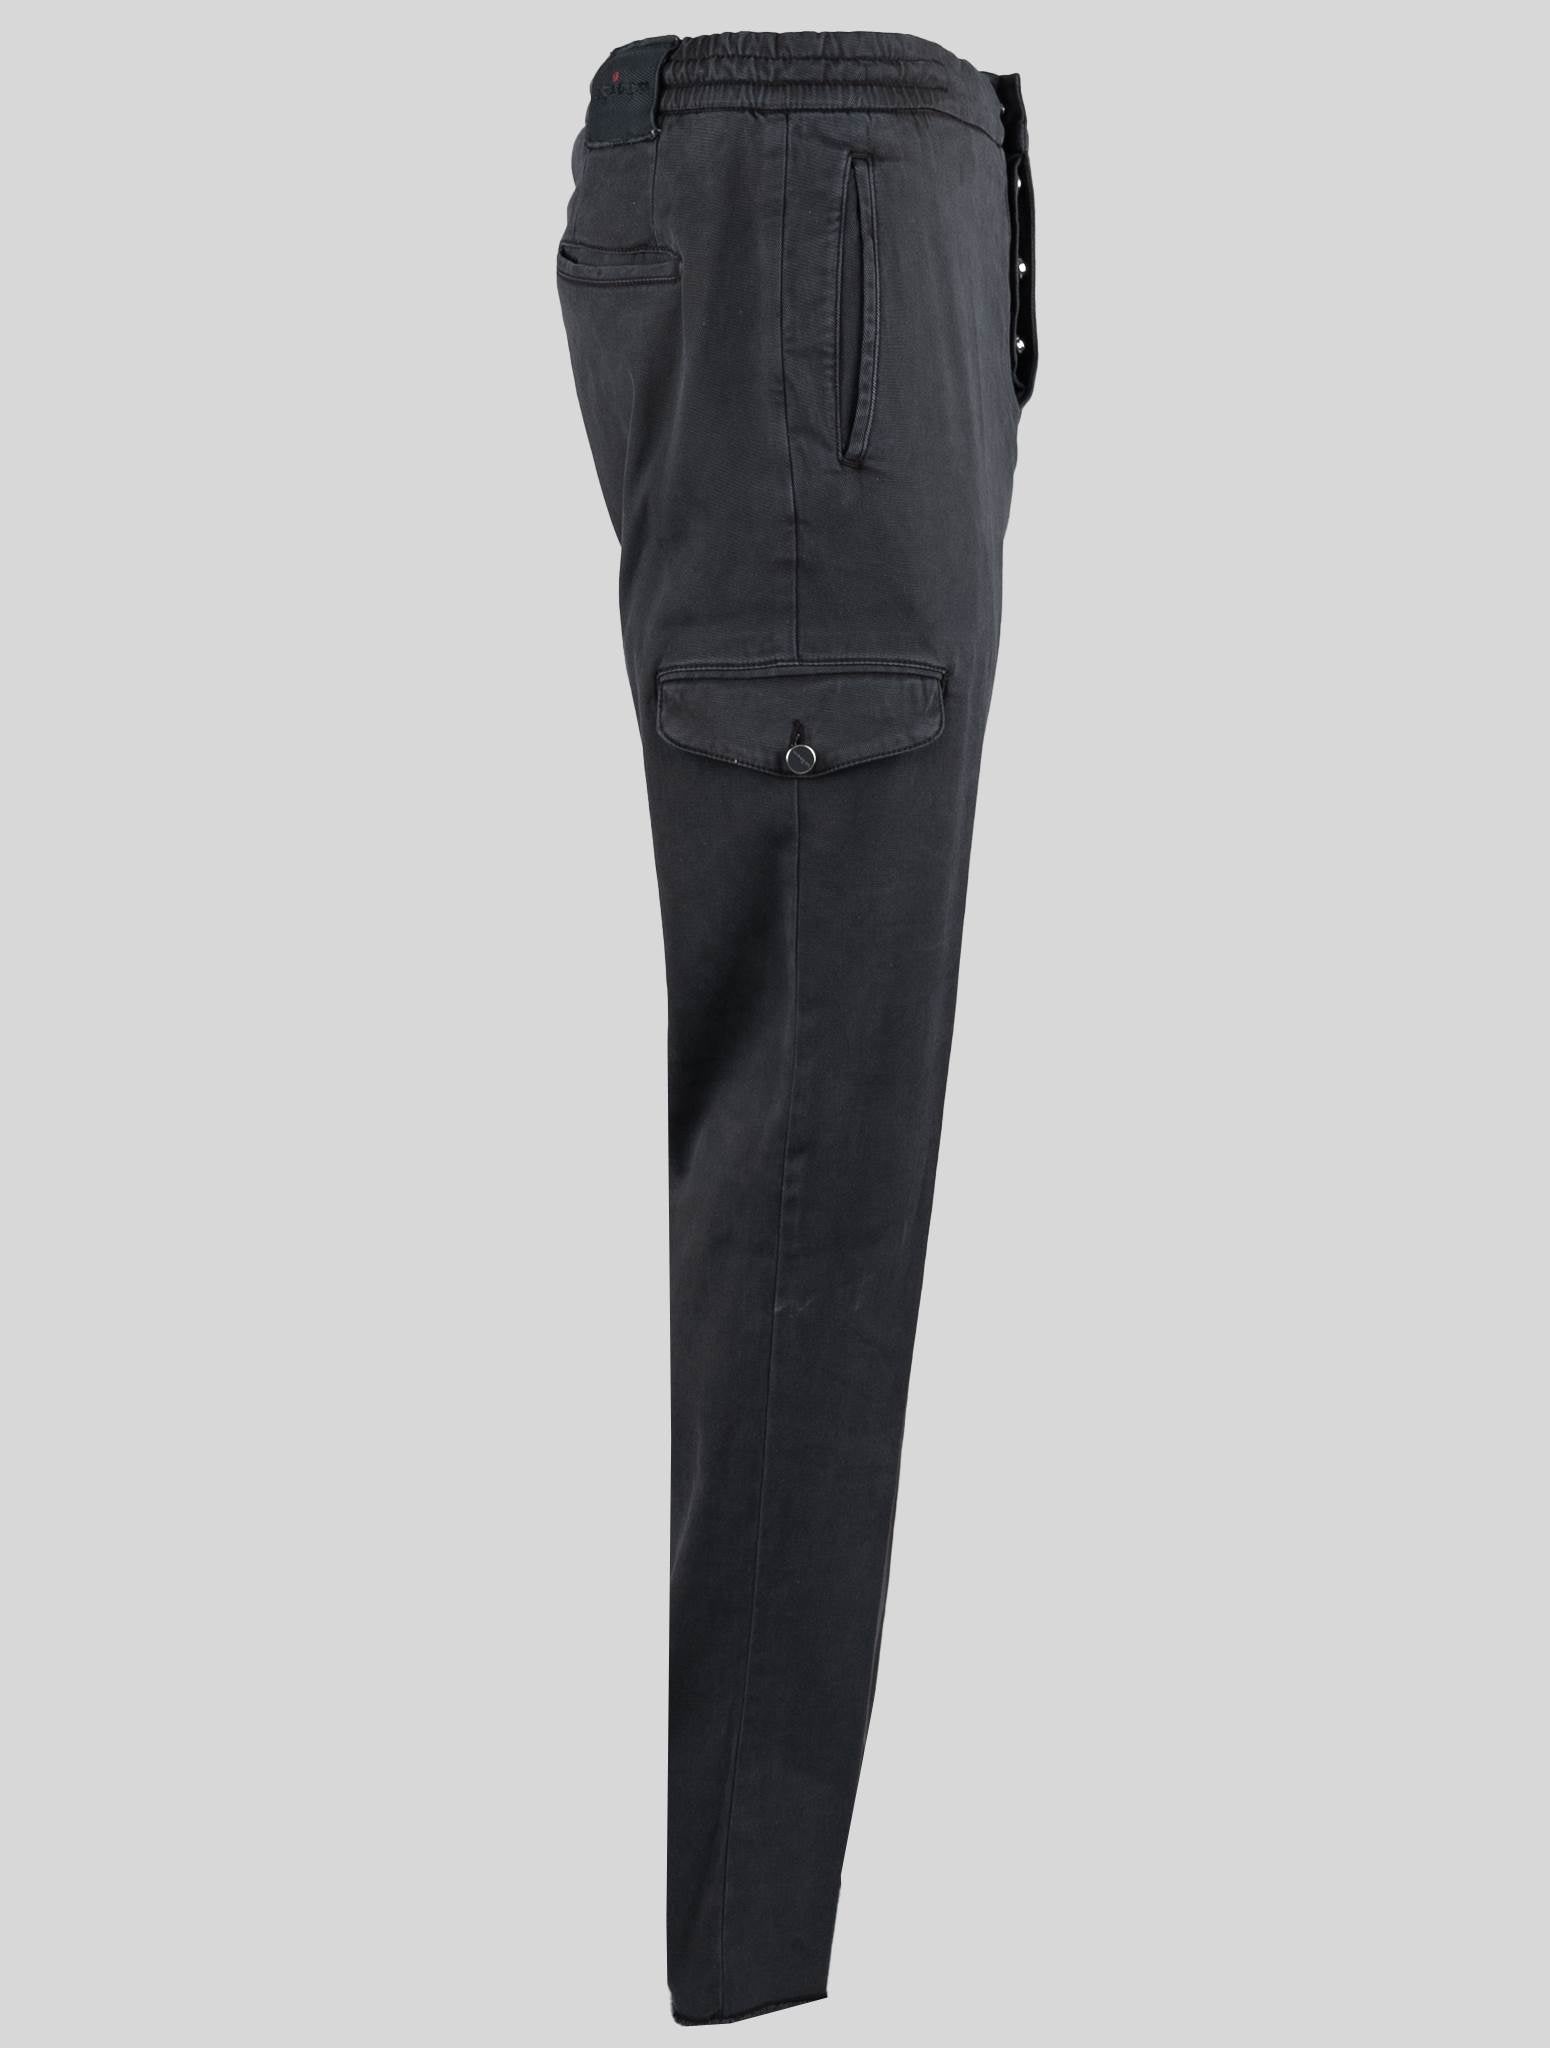 Black Cargo Pants for Men: Best Black Cargo Pants for Men in India: Combine  Style & Comfort - The Economic Times